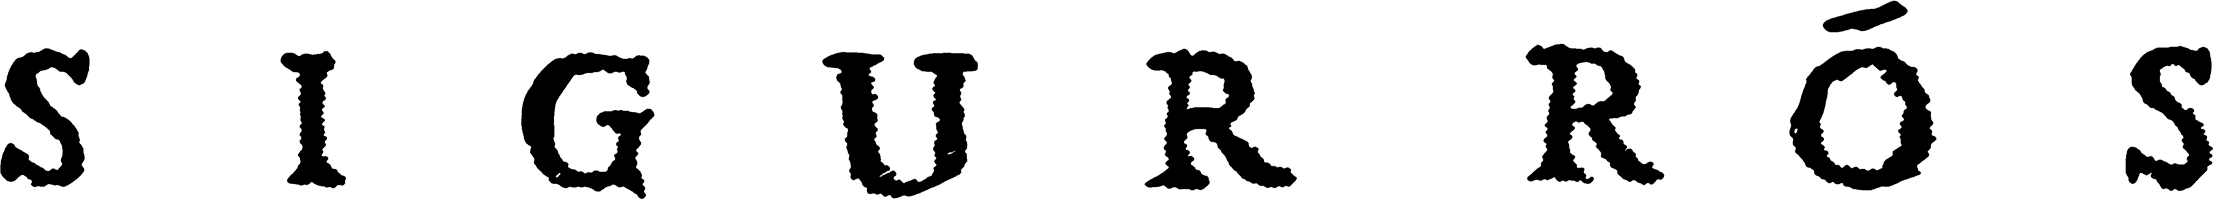 Ros Logo - Sigur Rós Online Store